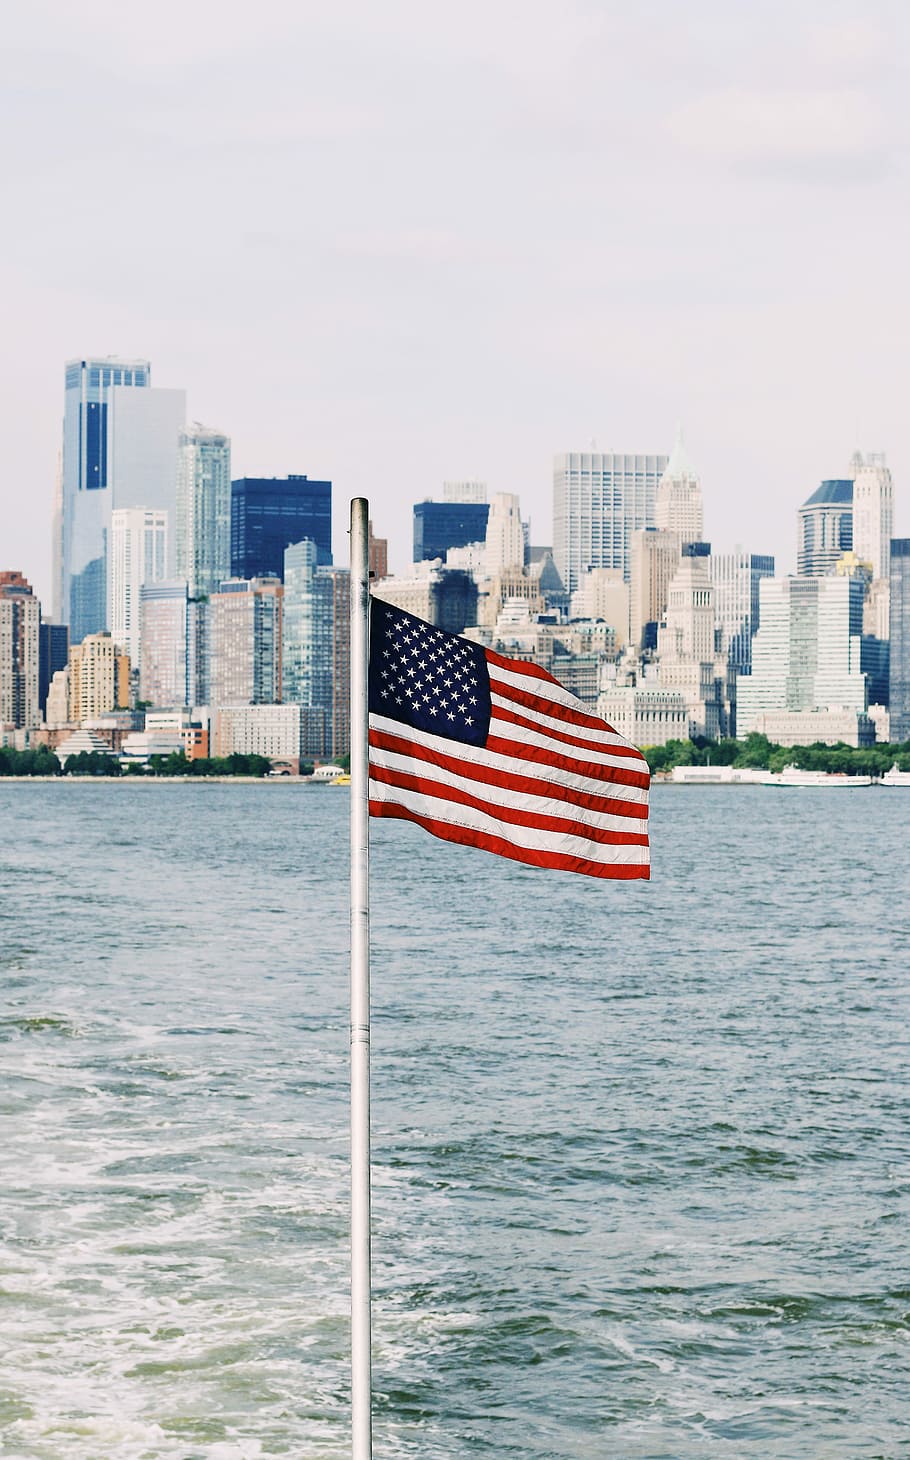 U.S.A. flag on pole near sea under cloudy sky, flag of USA near body of water, HD wallpaper